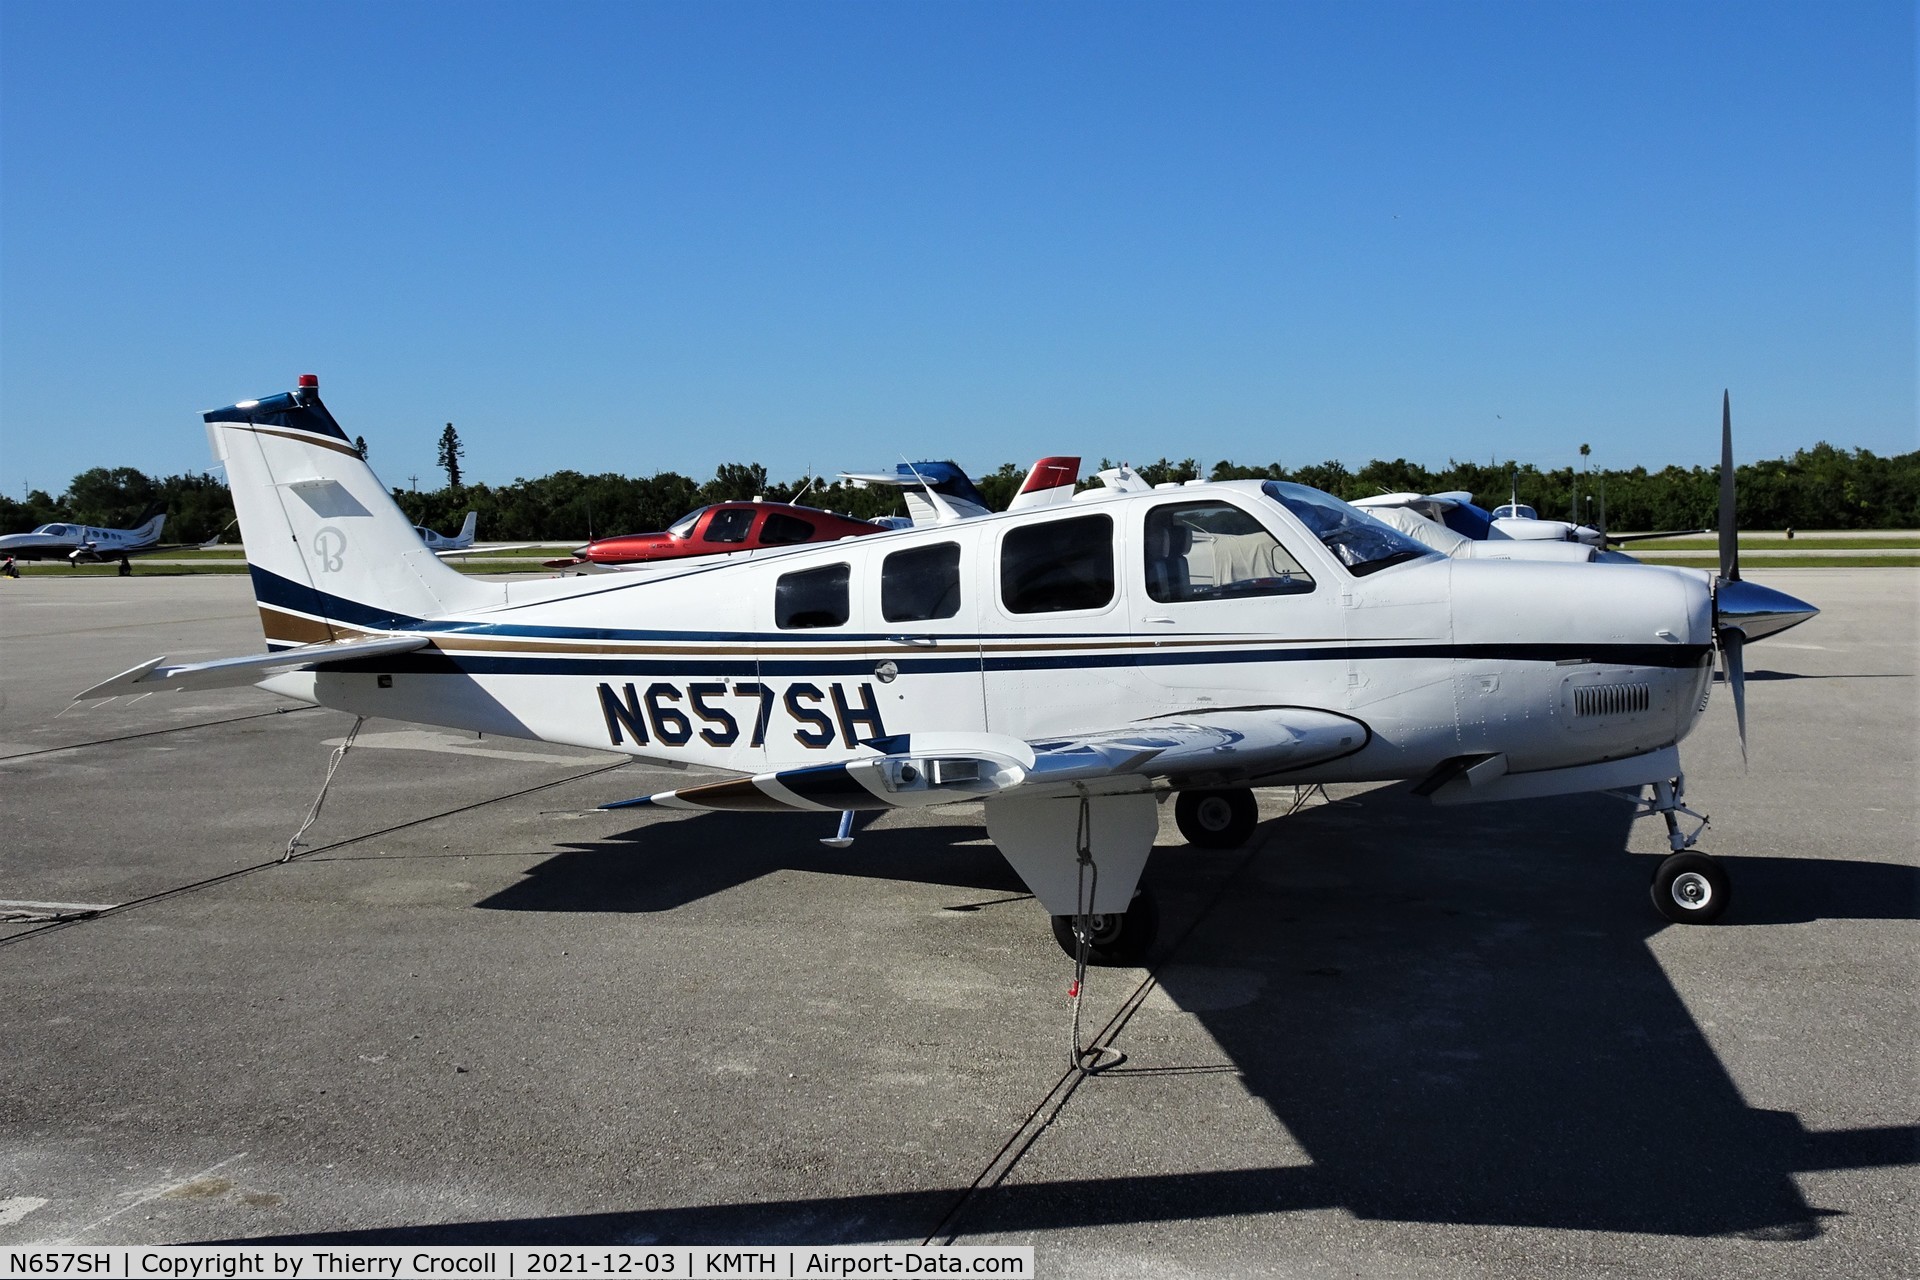 N657SH, Raytheon Aircraft Company G36 C/N E-3657, Parked at Marathon Airport, FL USA